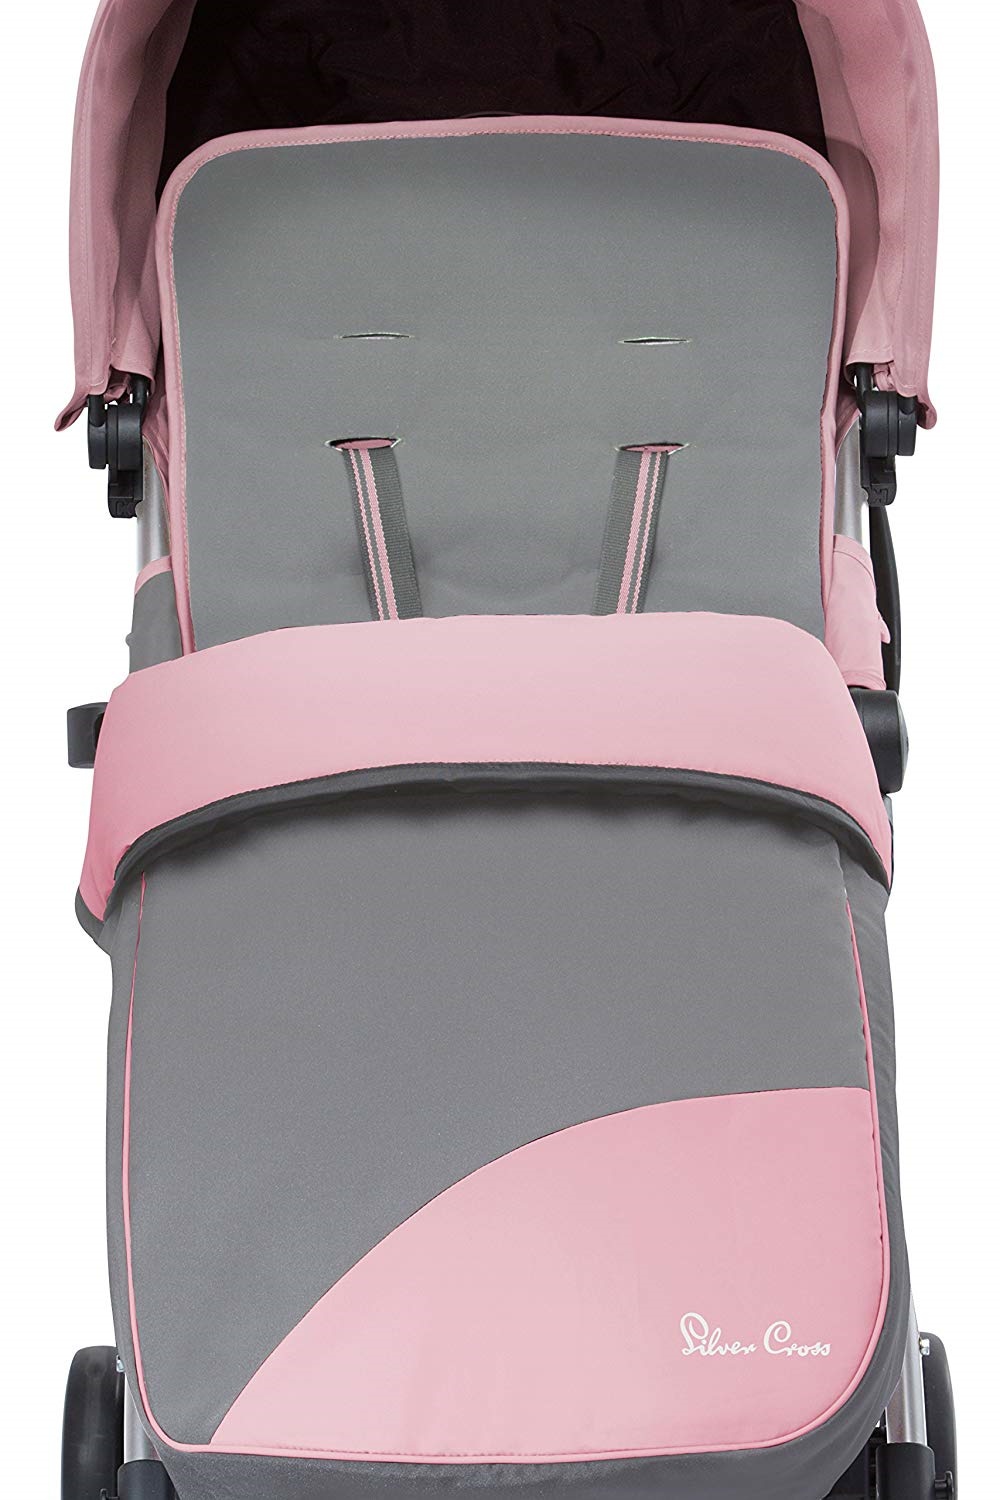 silver cross pop stroller footmuff vintage pink